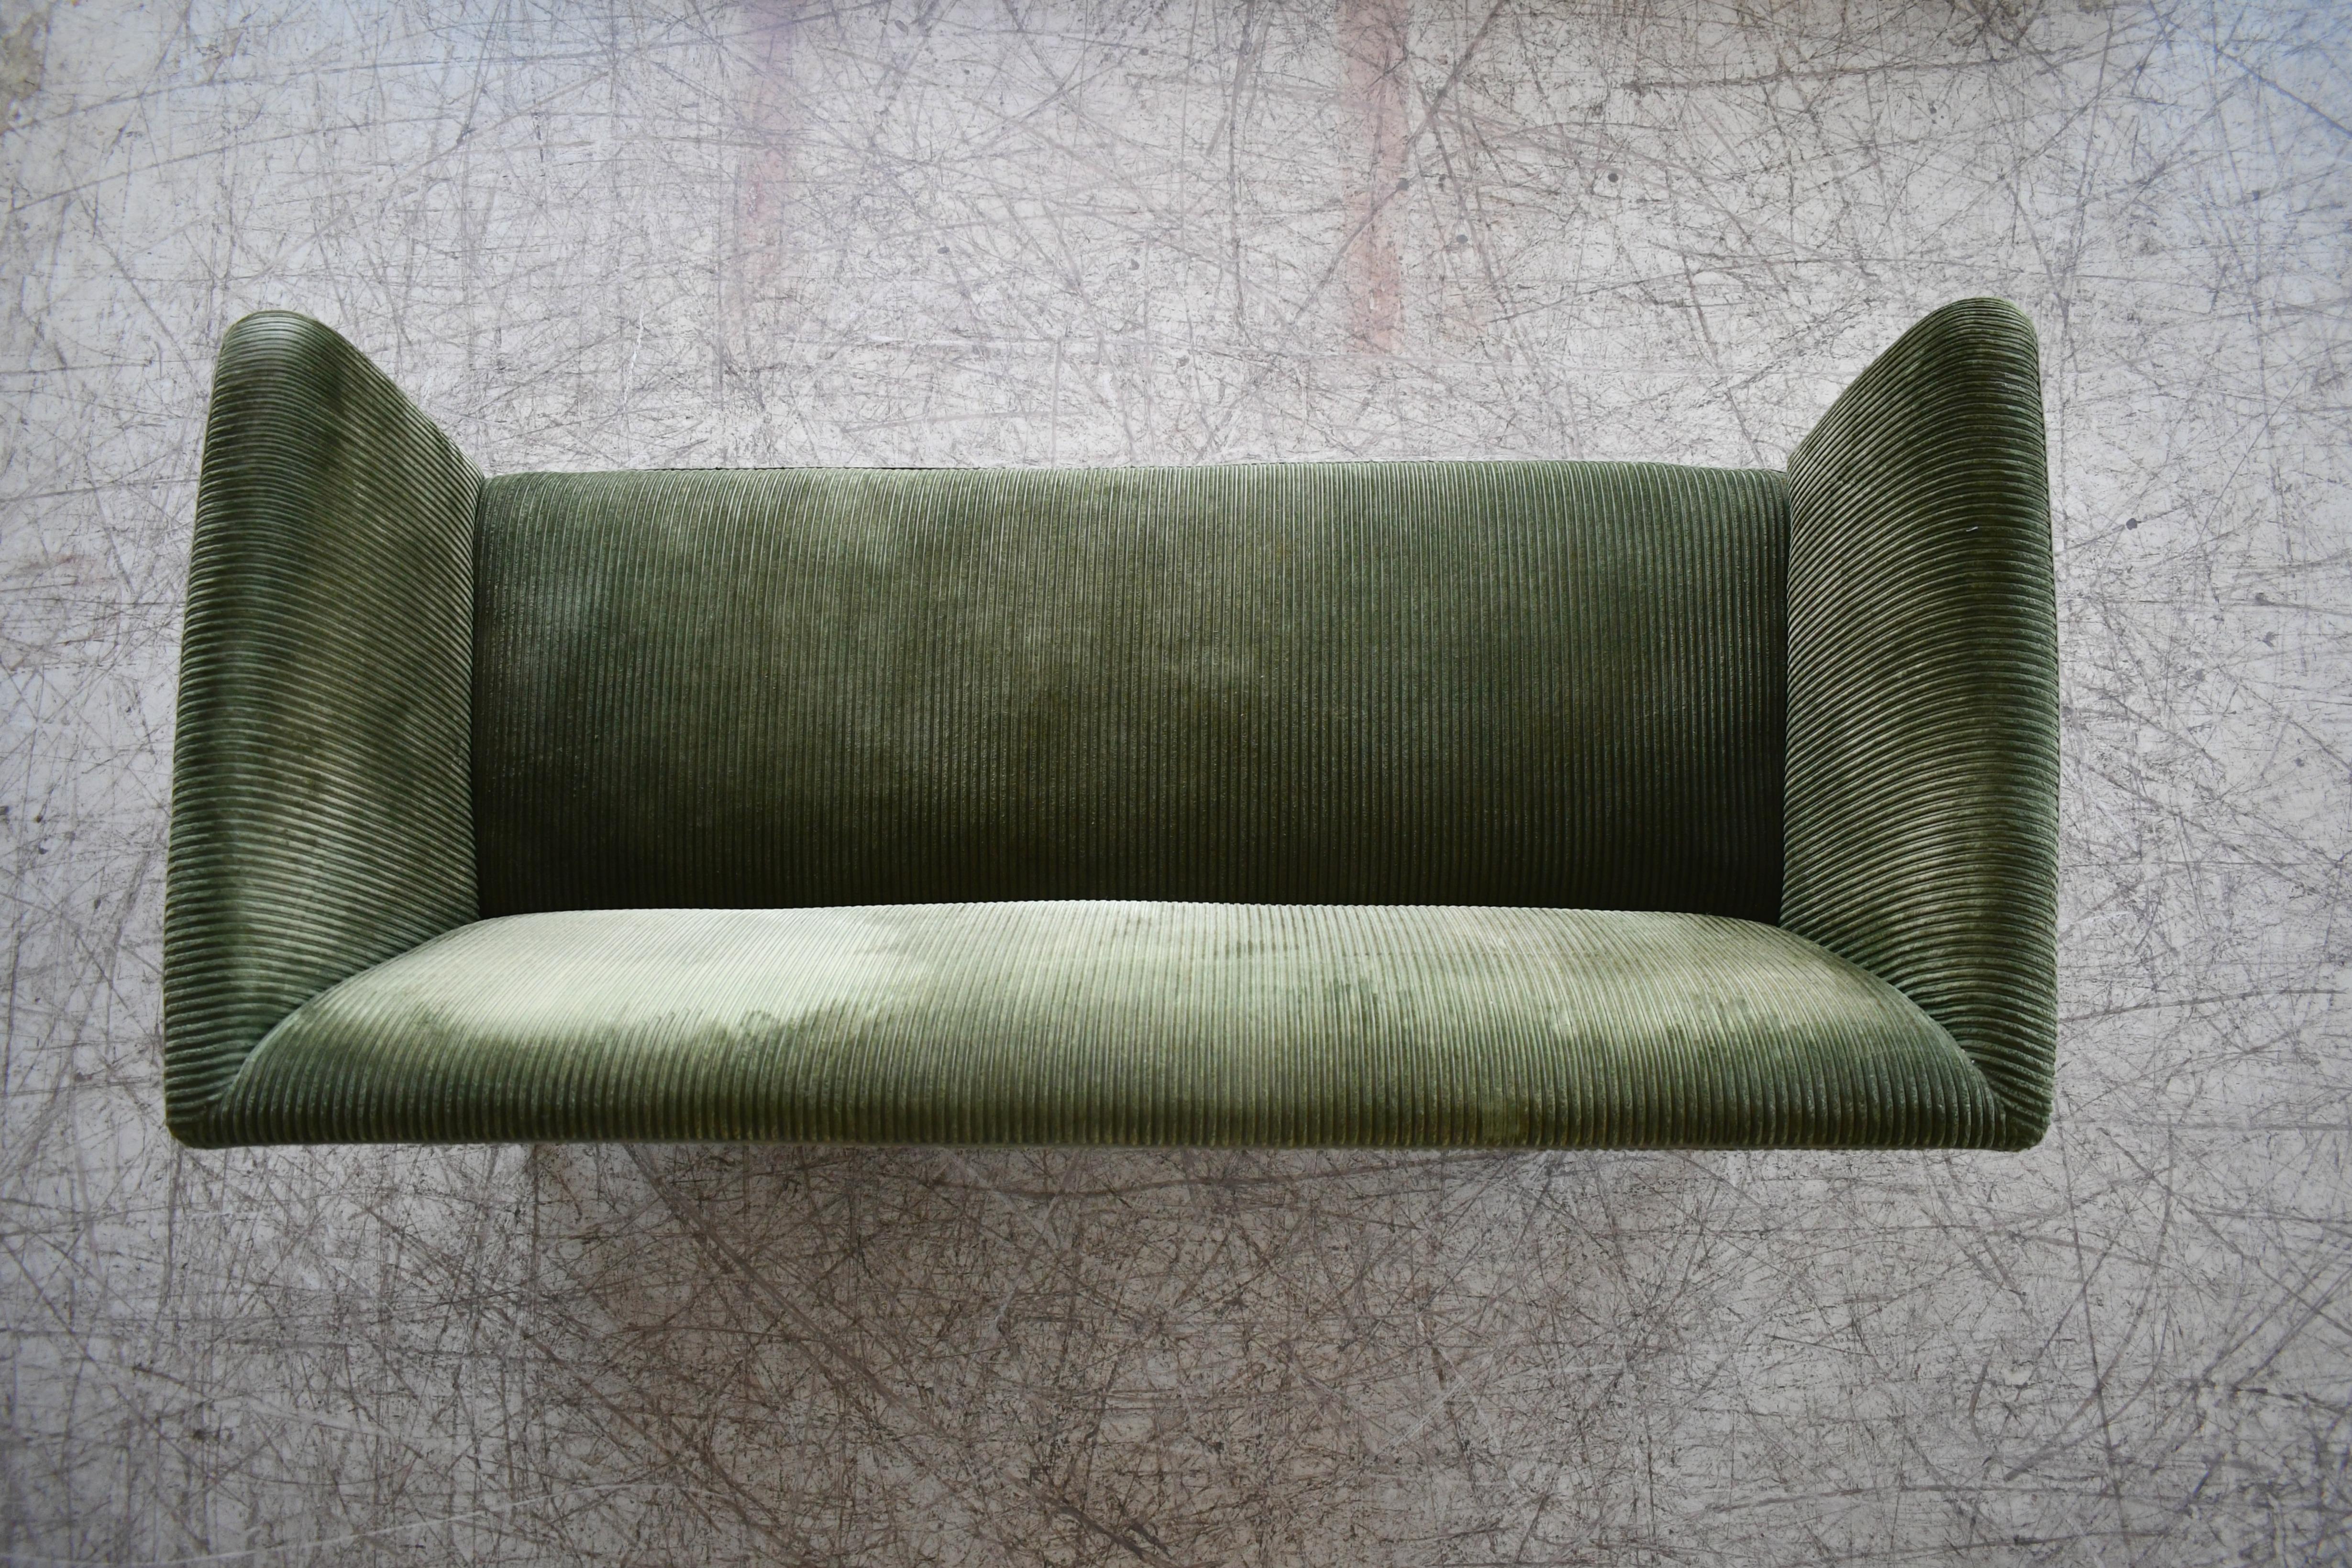 Late 20th Century Grete Jalk Style Danish Midcentury Two-Seat Sofa in Green Corduroy